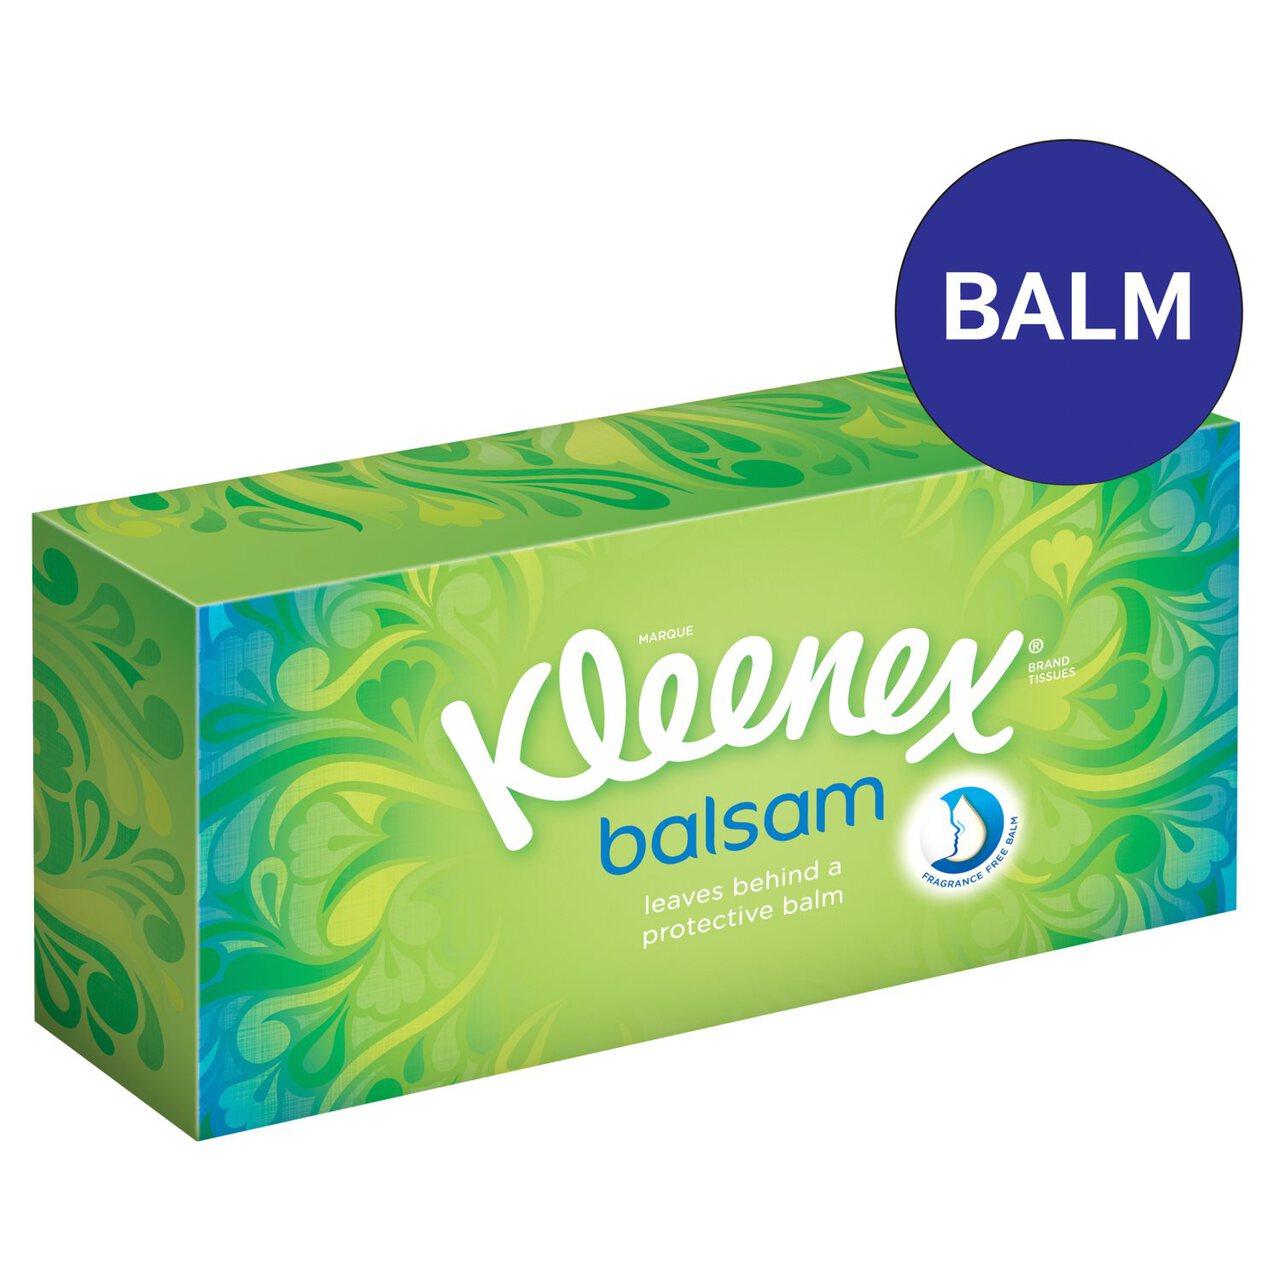 Kleenex Balsam Facial Tissues - Single Box 64 per pack